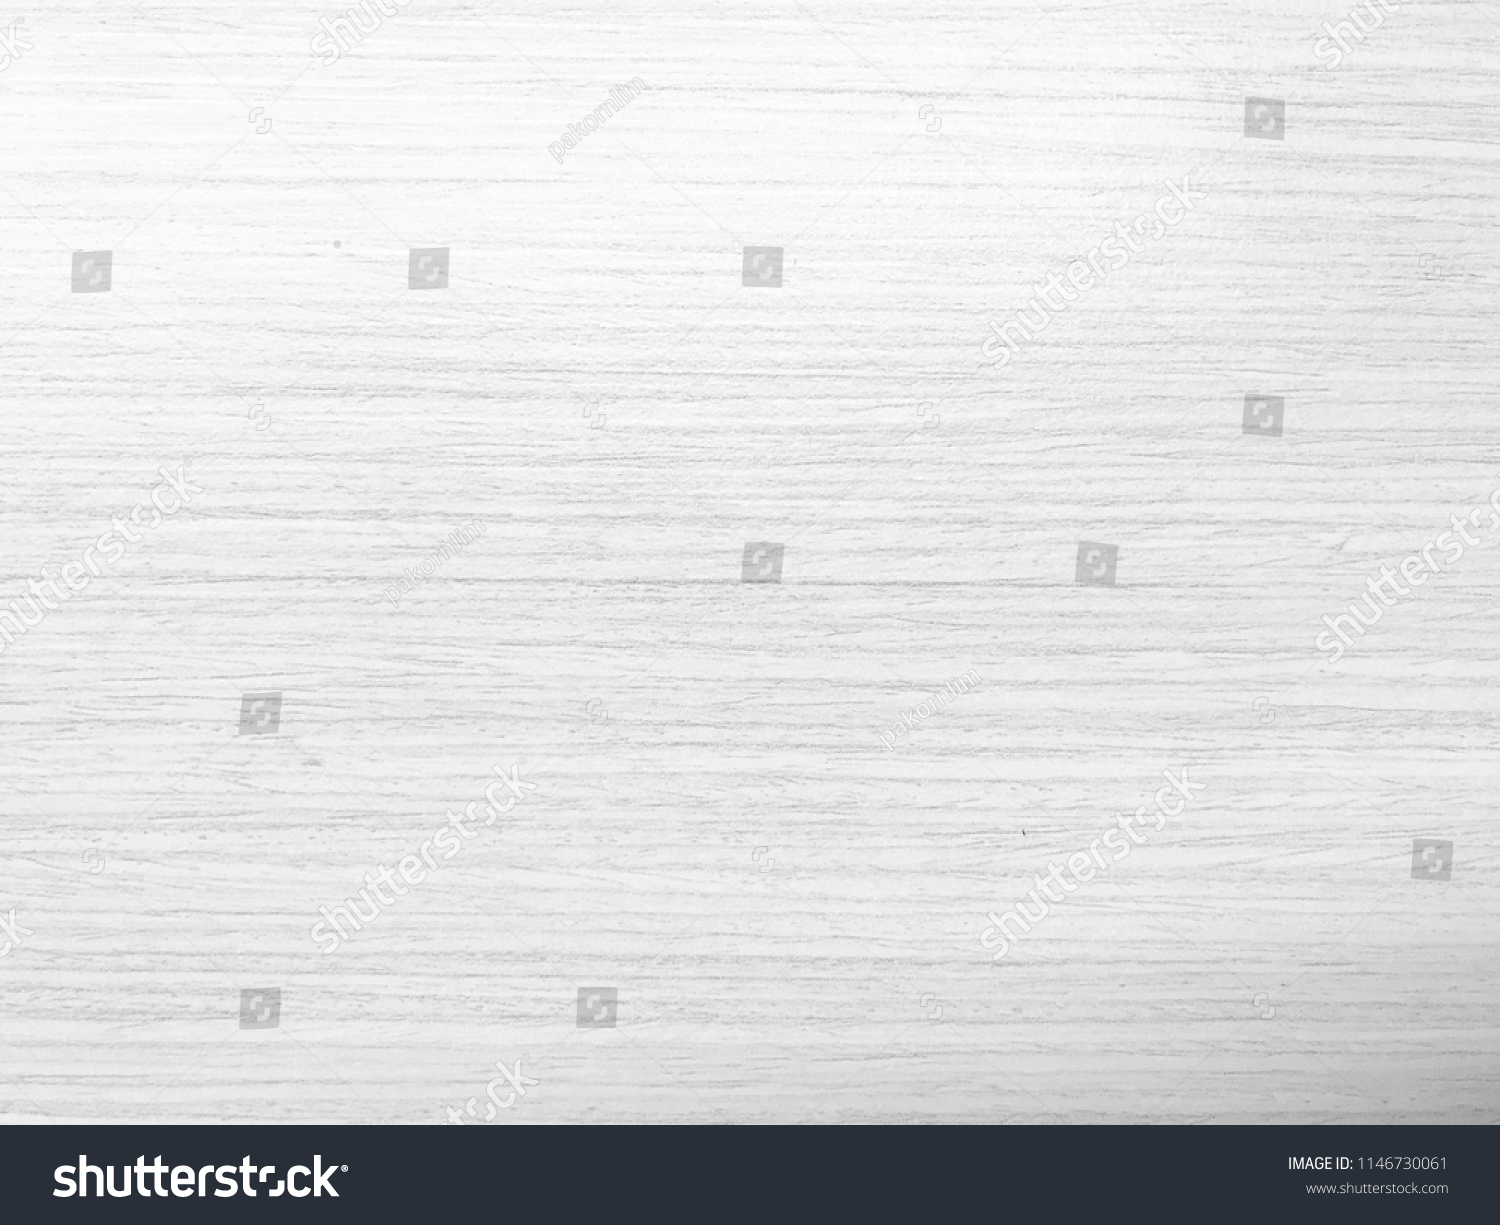 White background, wood pattern. #1146730061